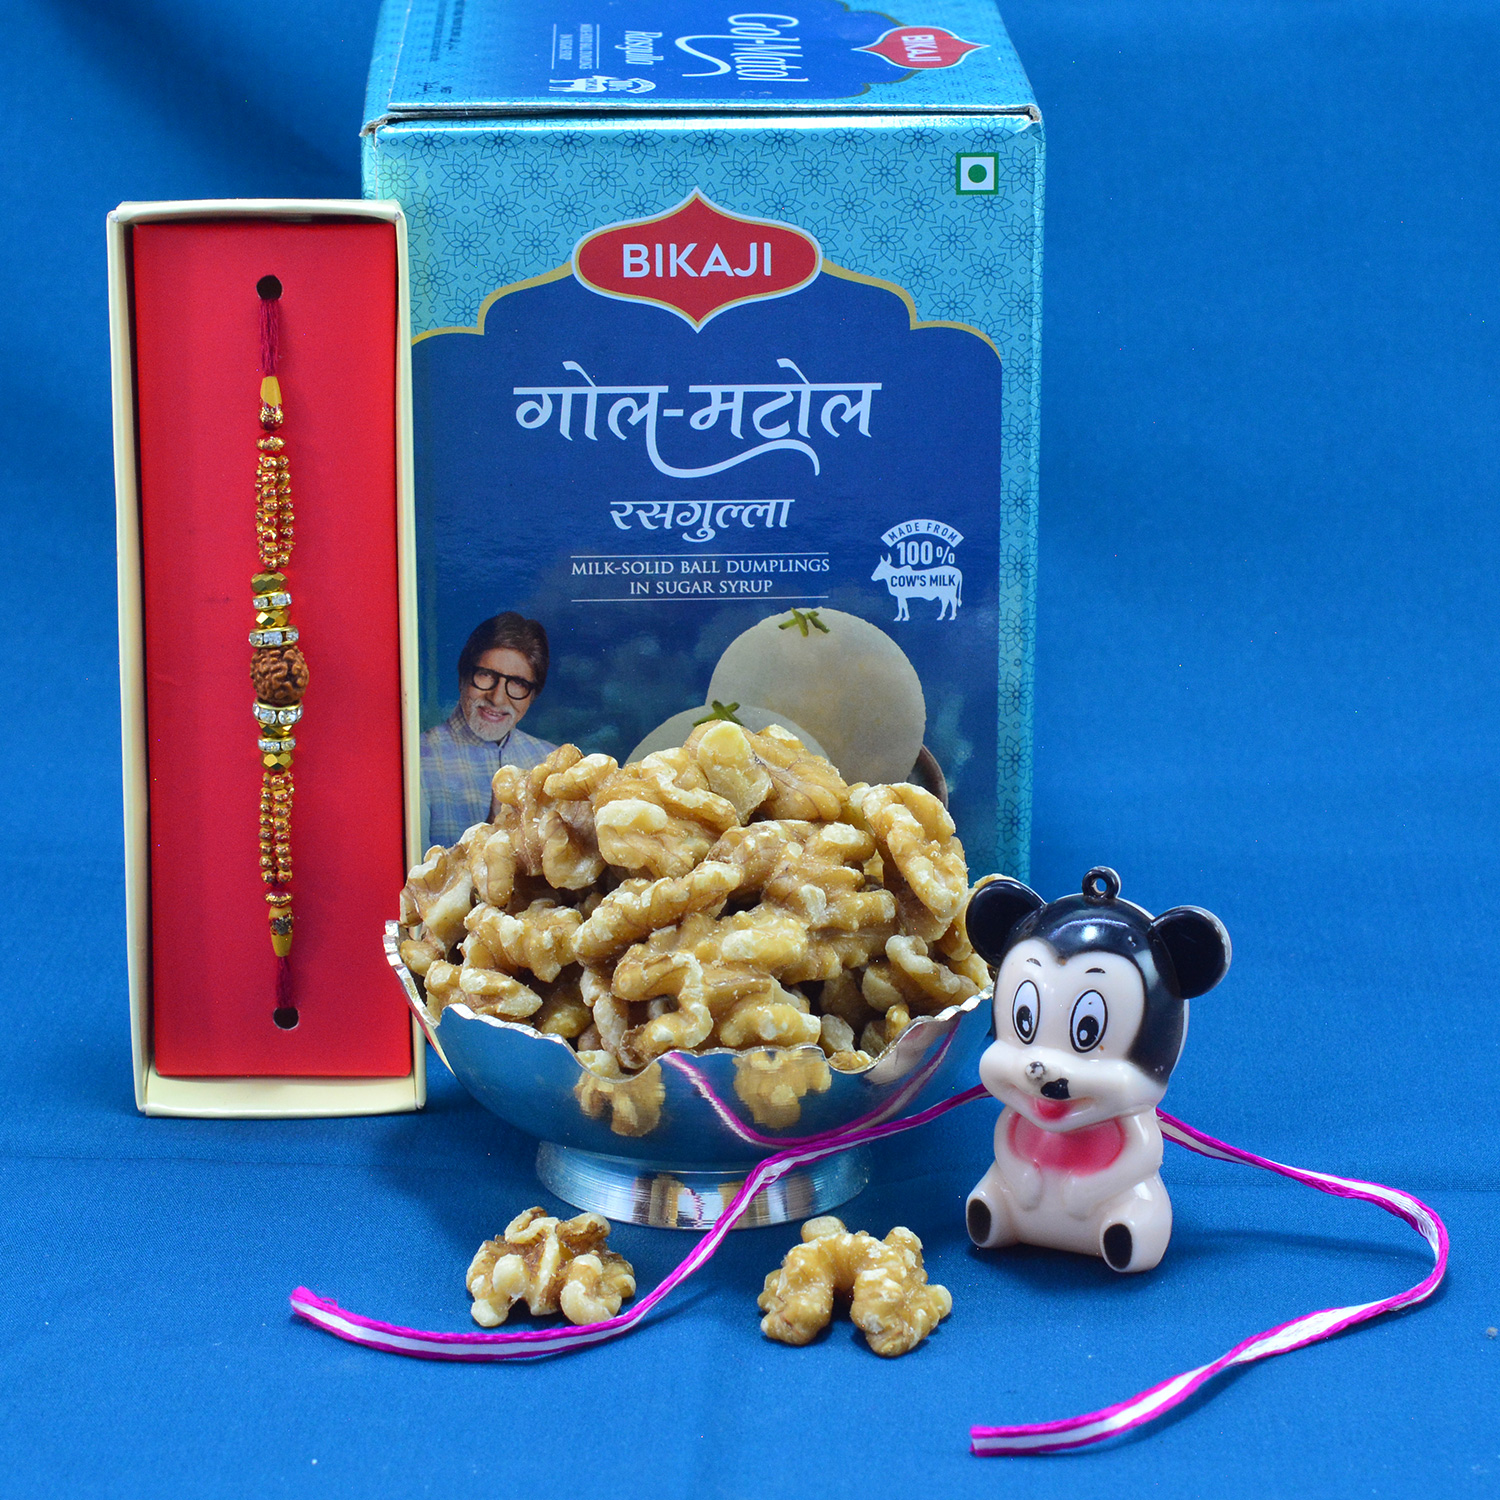 Stunning Rudraksha Beads Rakhi with Kids Rakhi along with Tasty Walnuts and captivating Bikaji Gol Matol Rasgulla